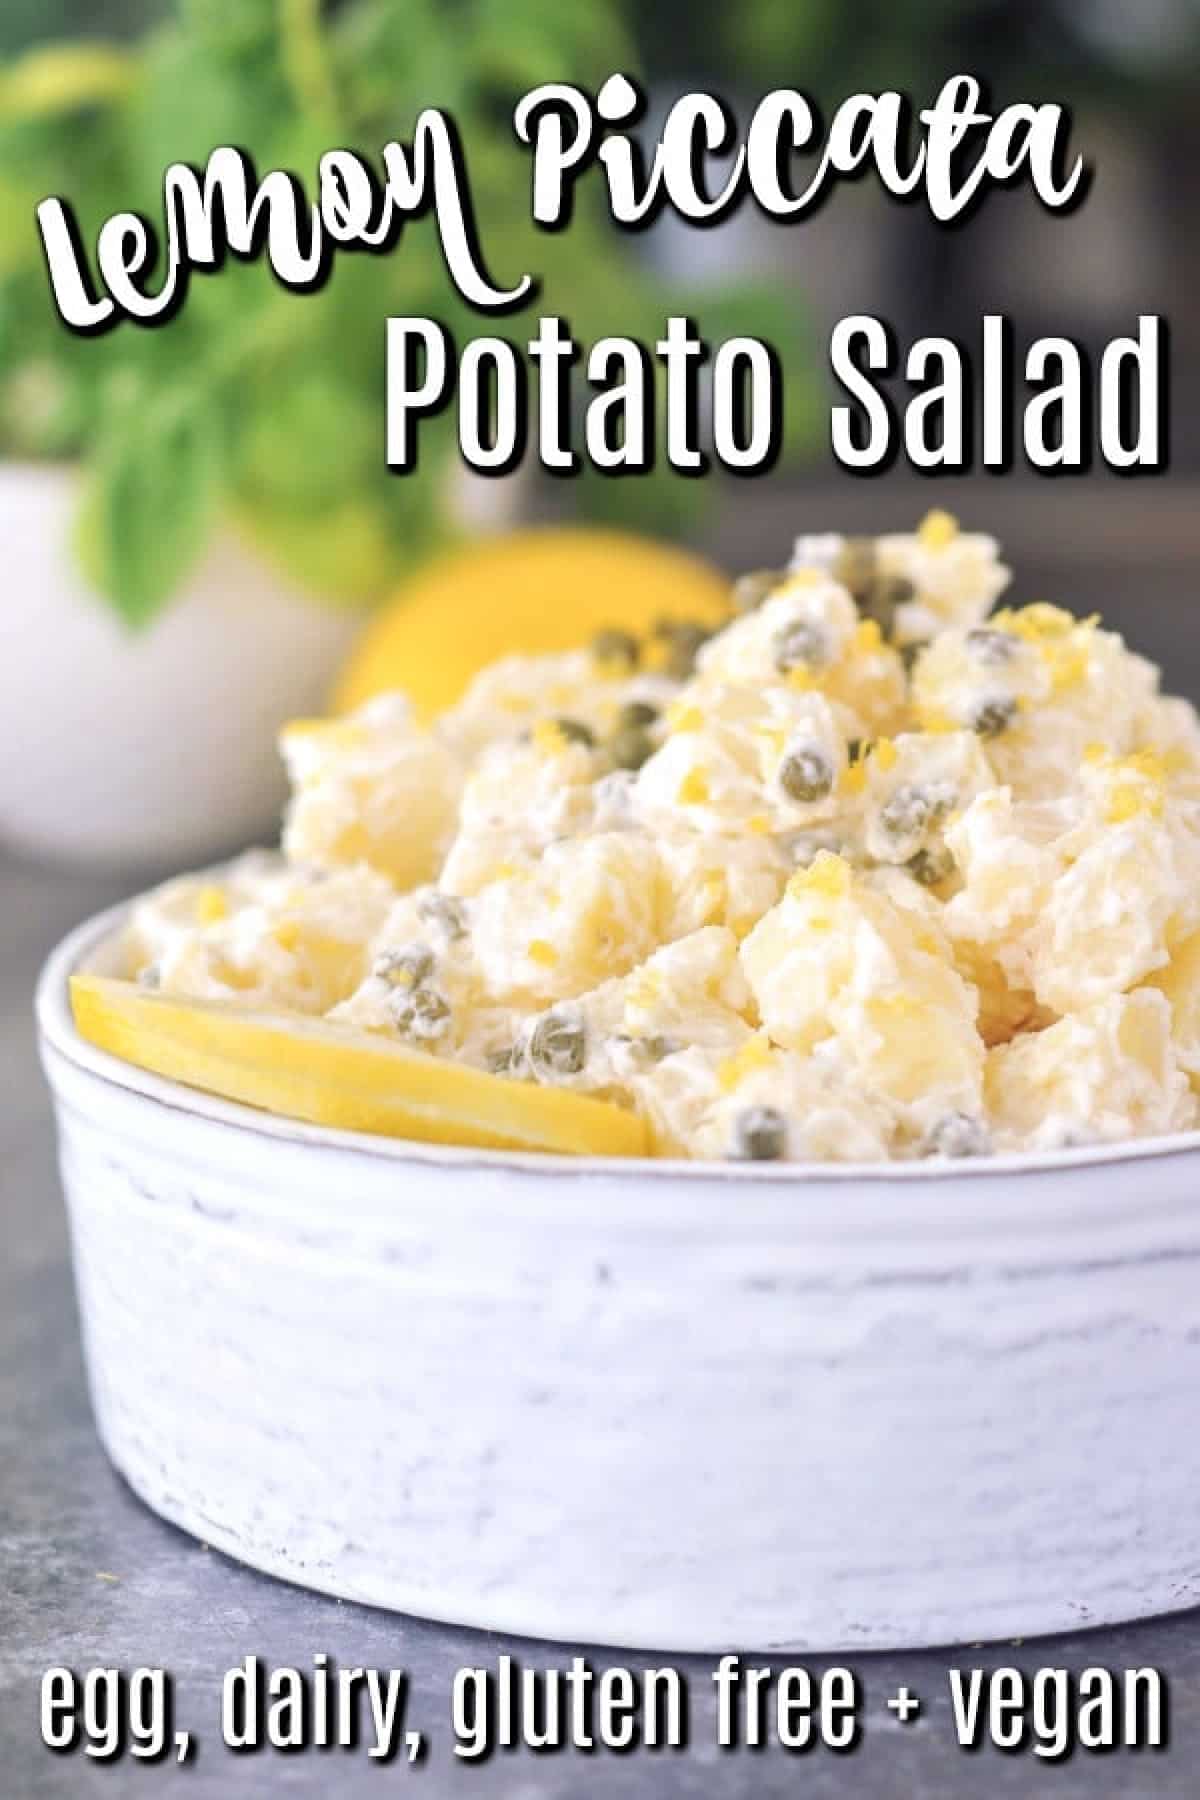 Lemon piccata potato salad in a serving bowl, garnished with a lemon slice, lemon zest, and capers